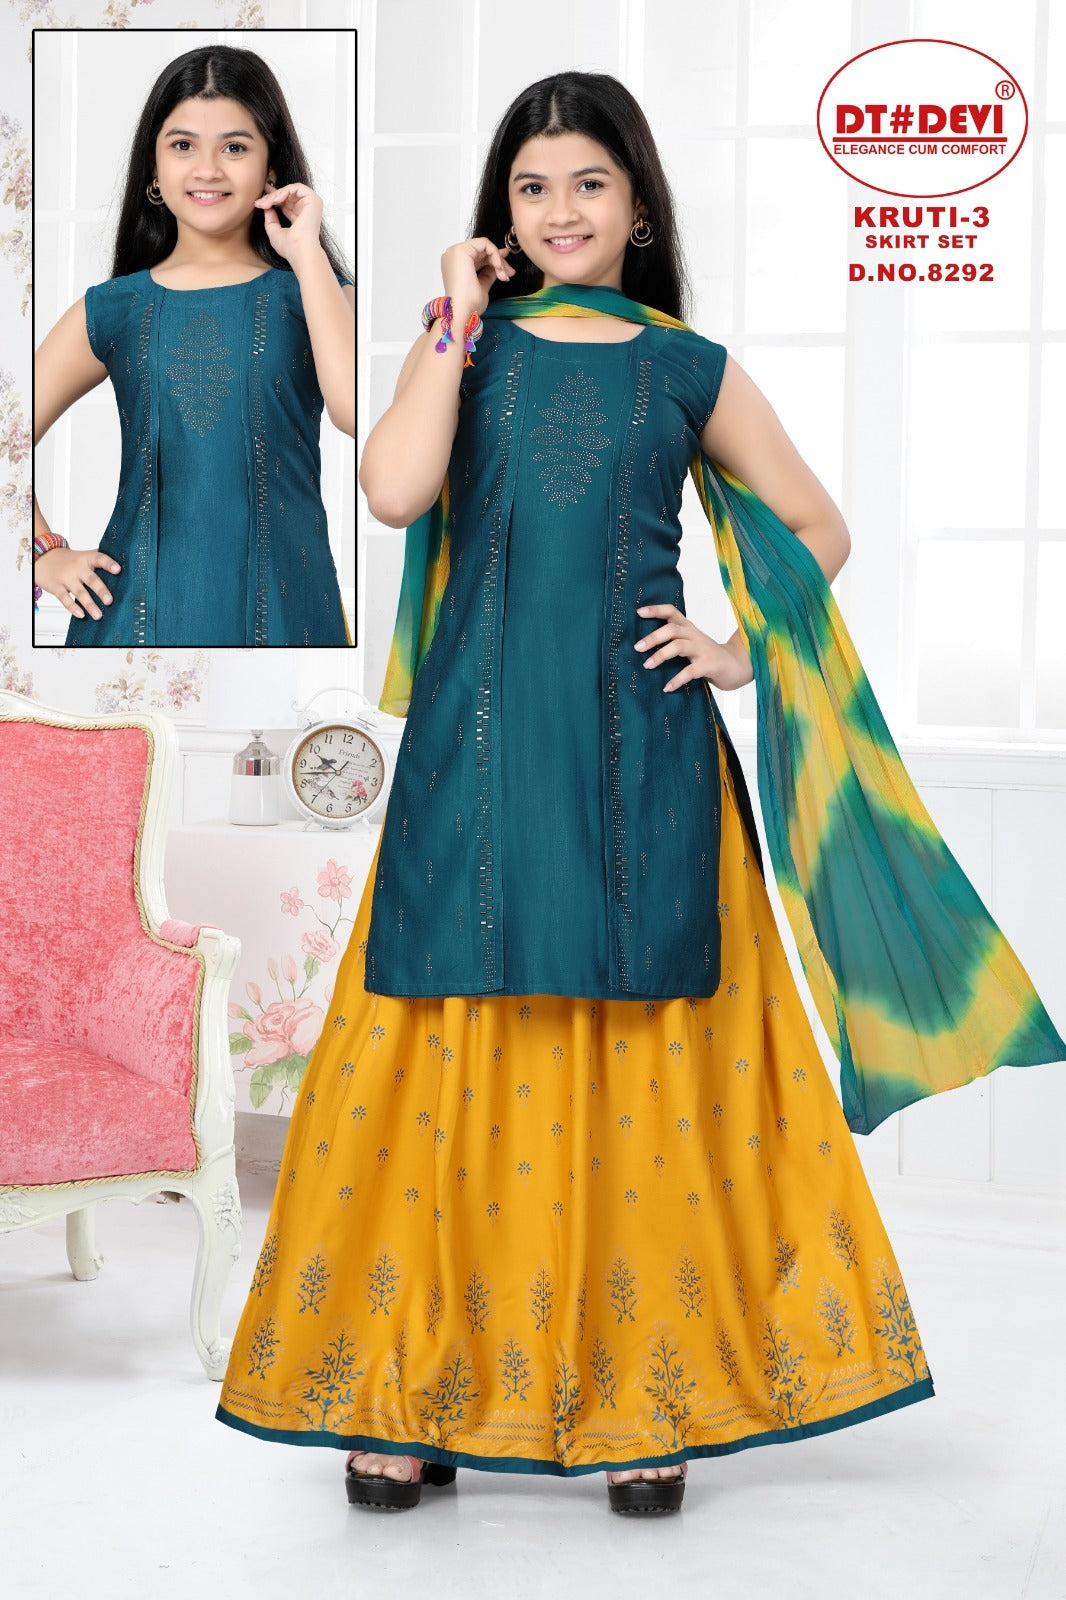 Kruti Vol 3-8292 Dt Devi Girls Readymade Skirt Style Suits